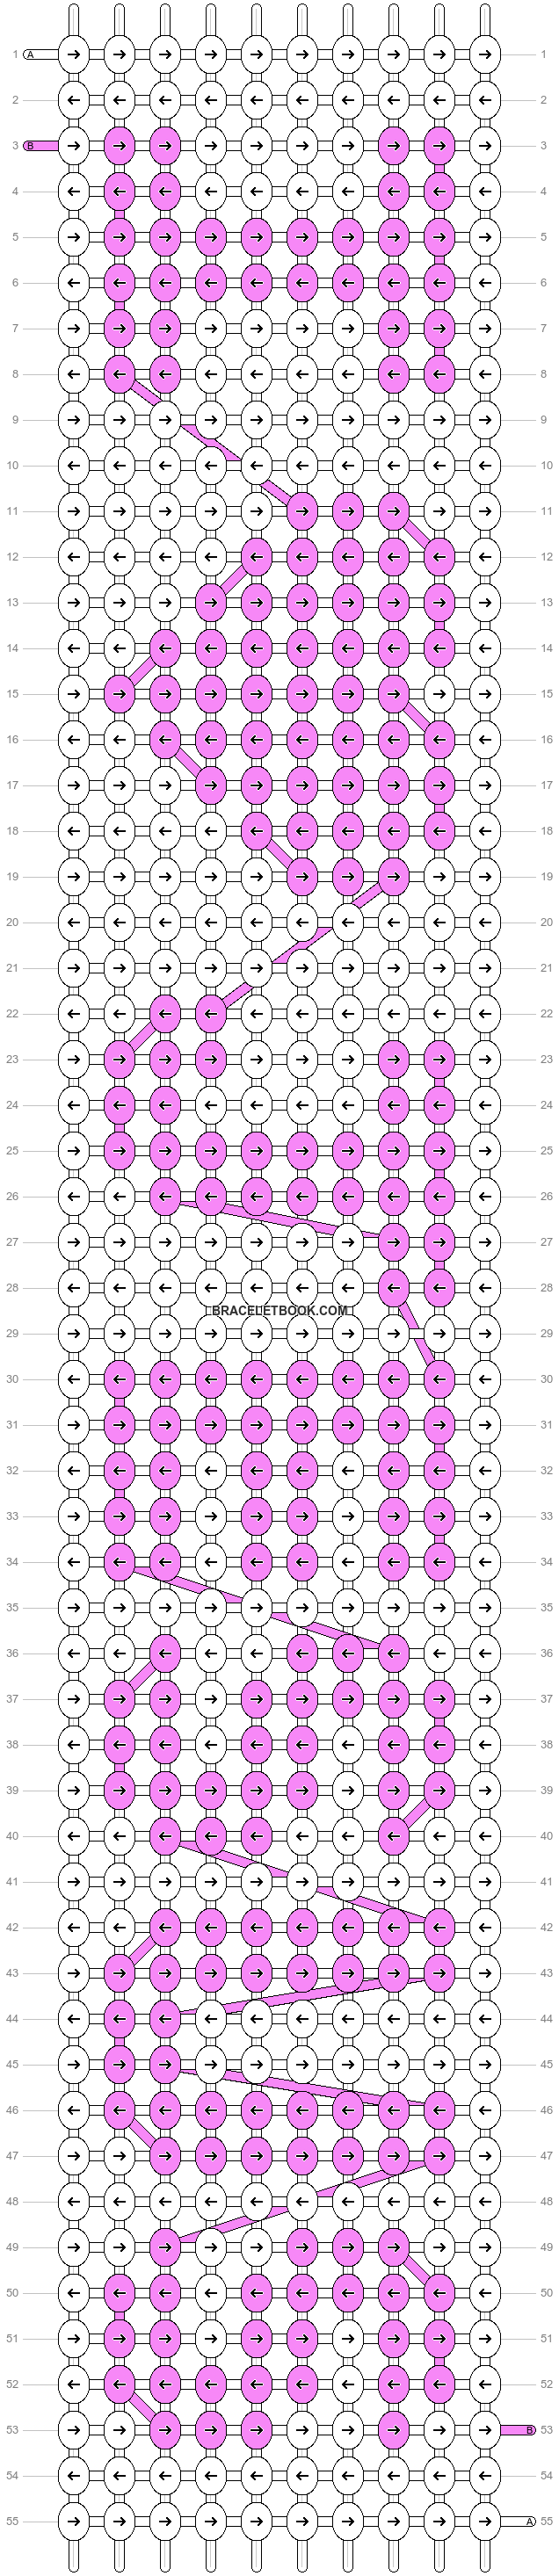 Alpha pattern #19594 variation #28858 pattern